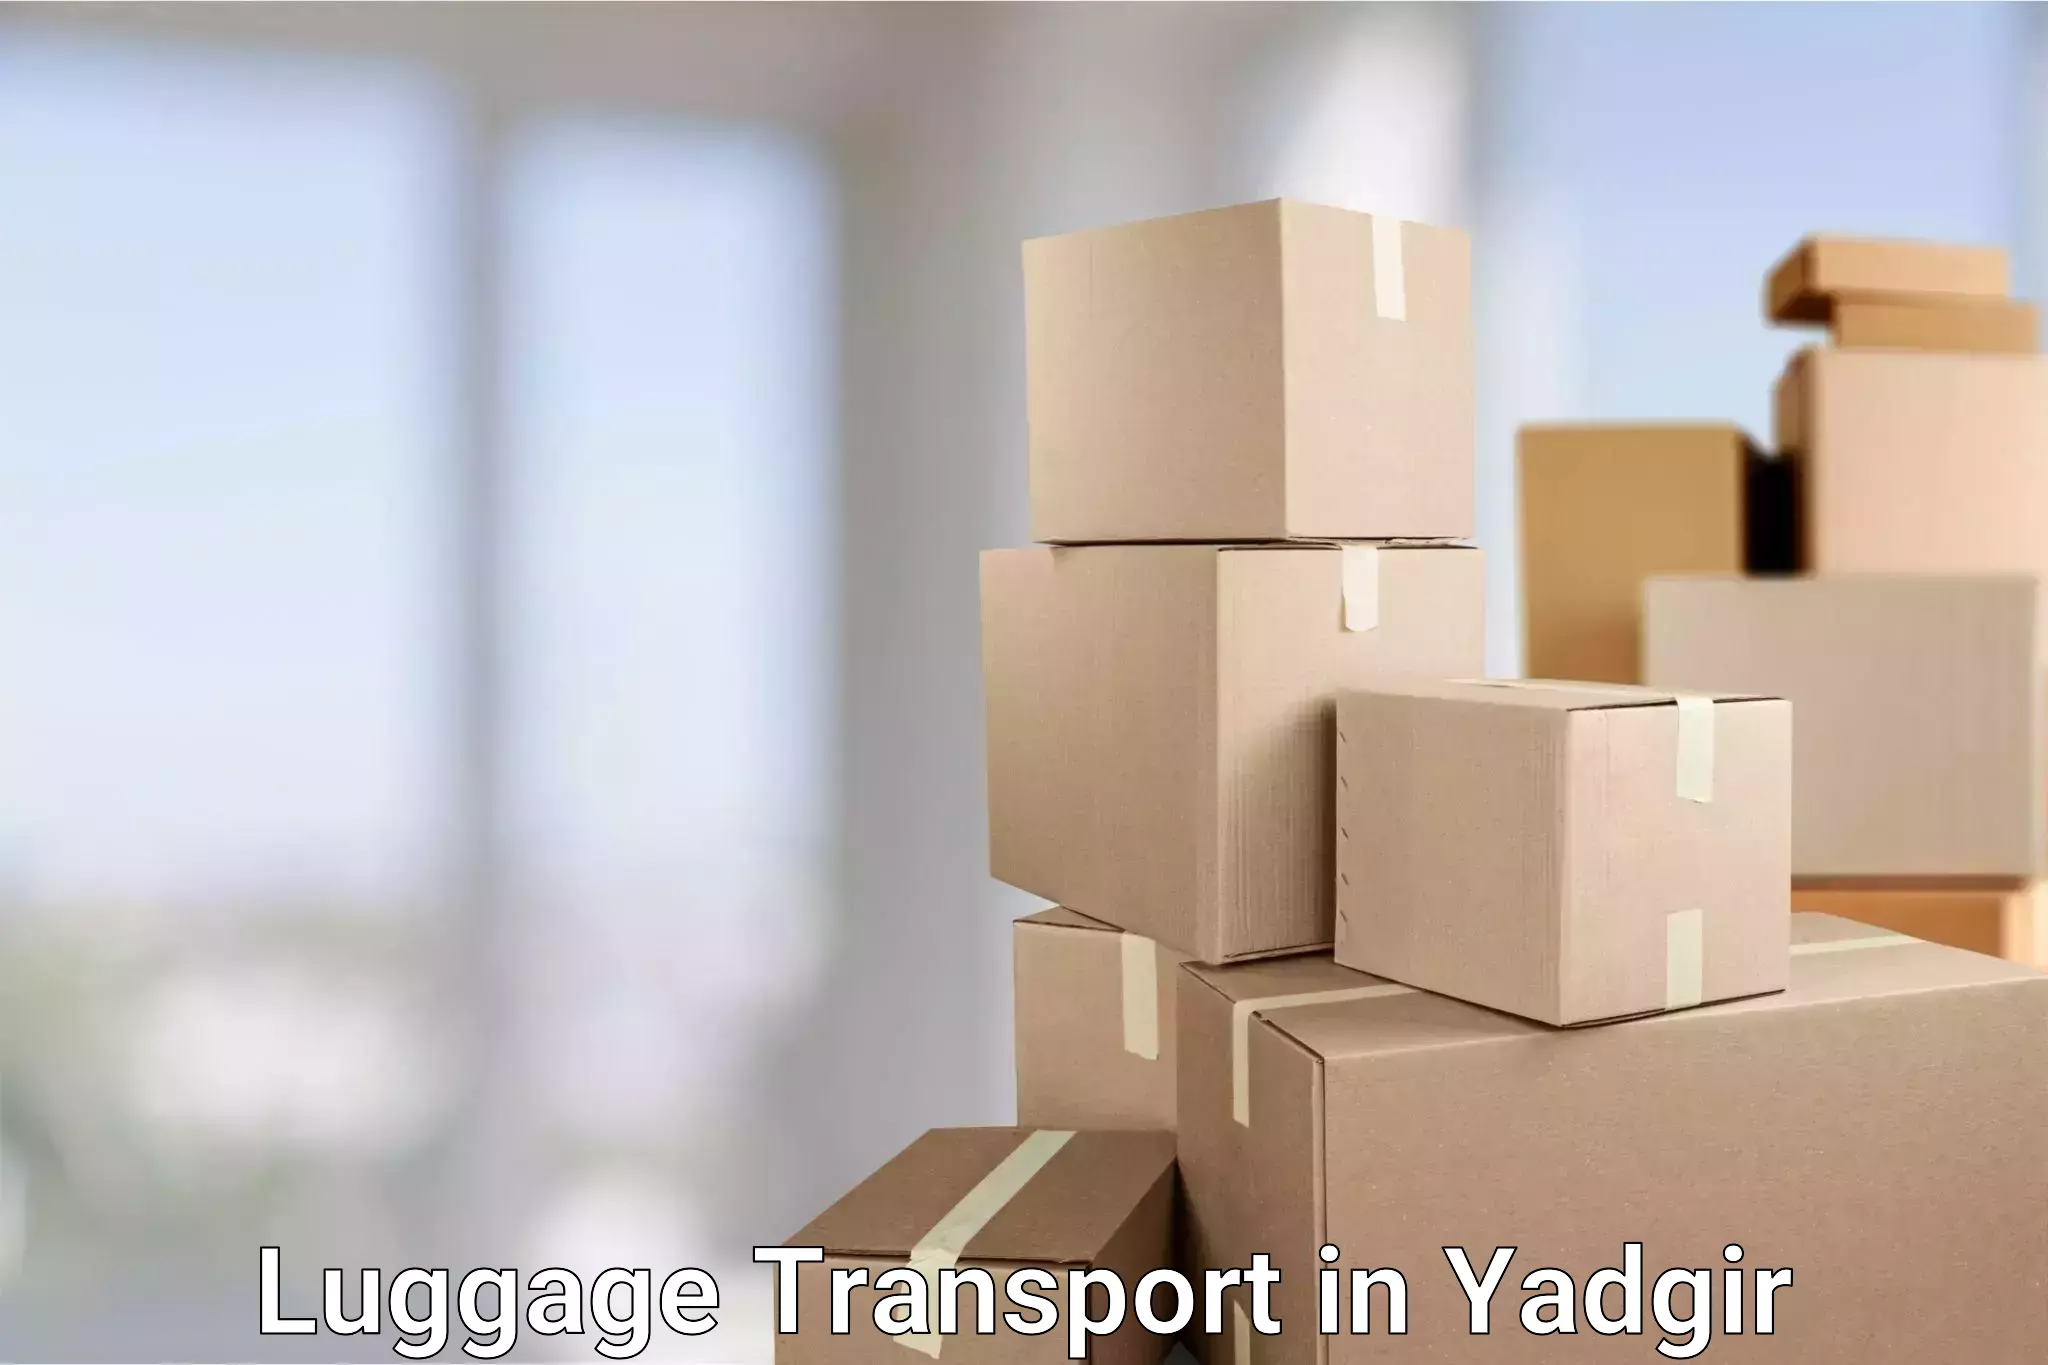 Corporate baggage transport in Yadgir